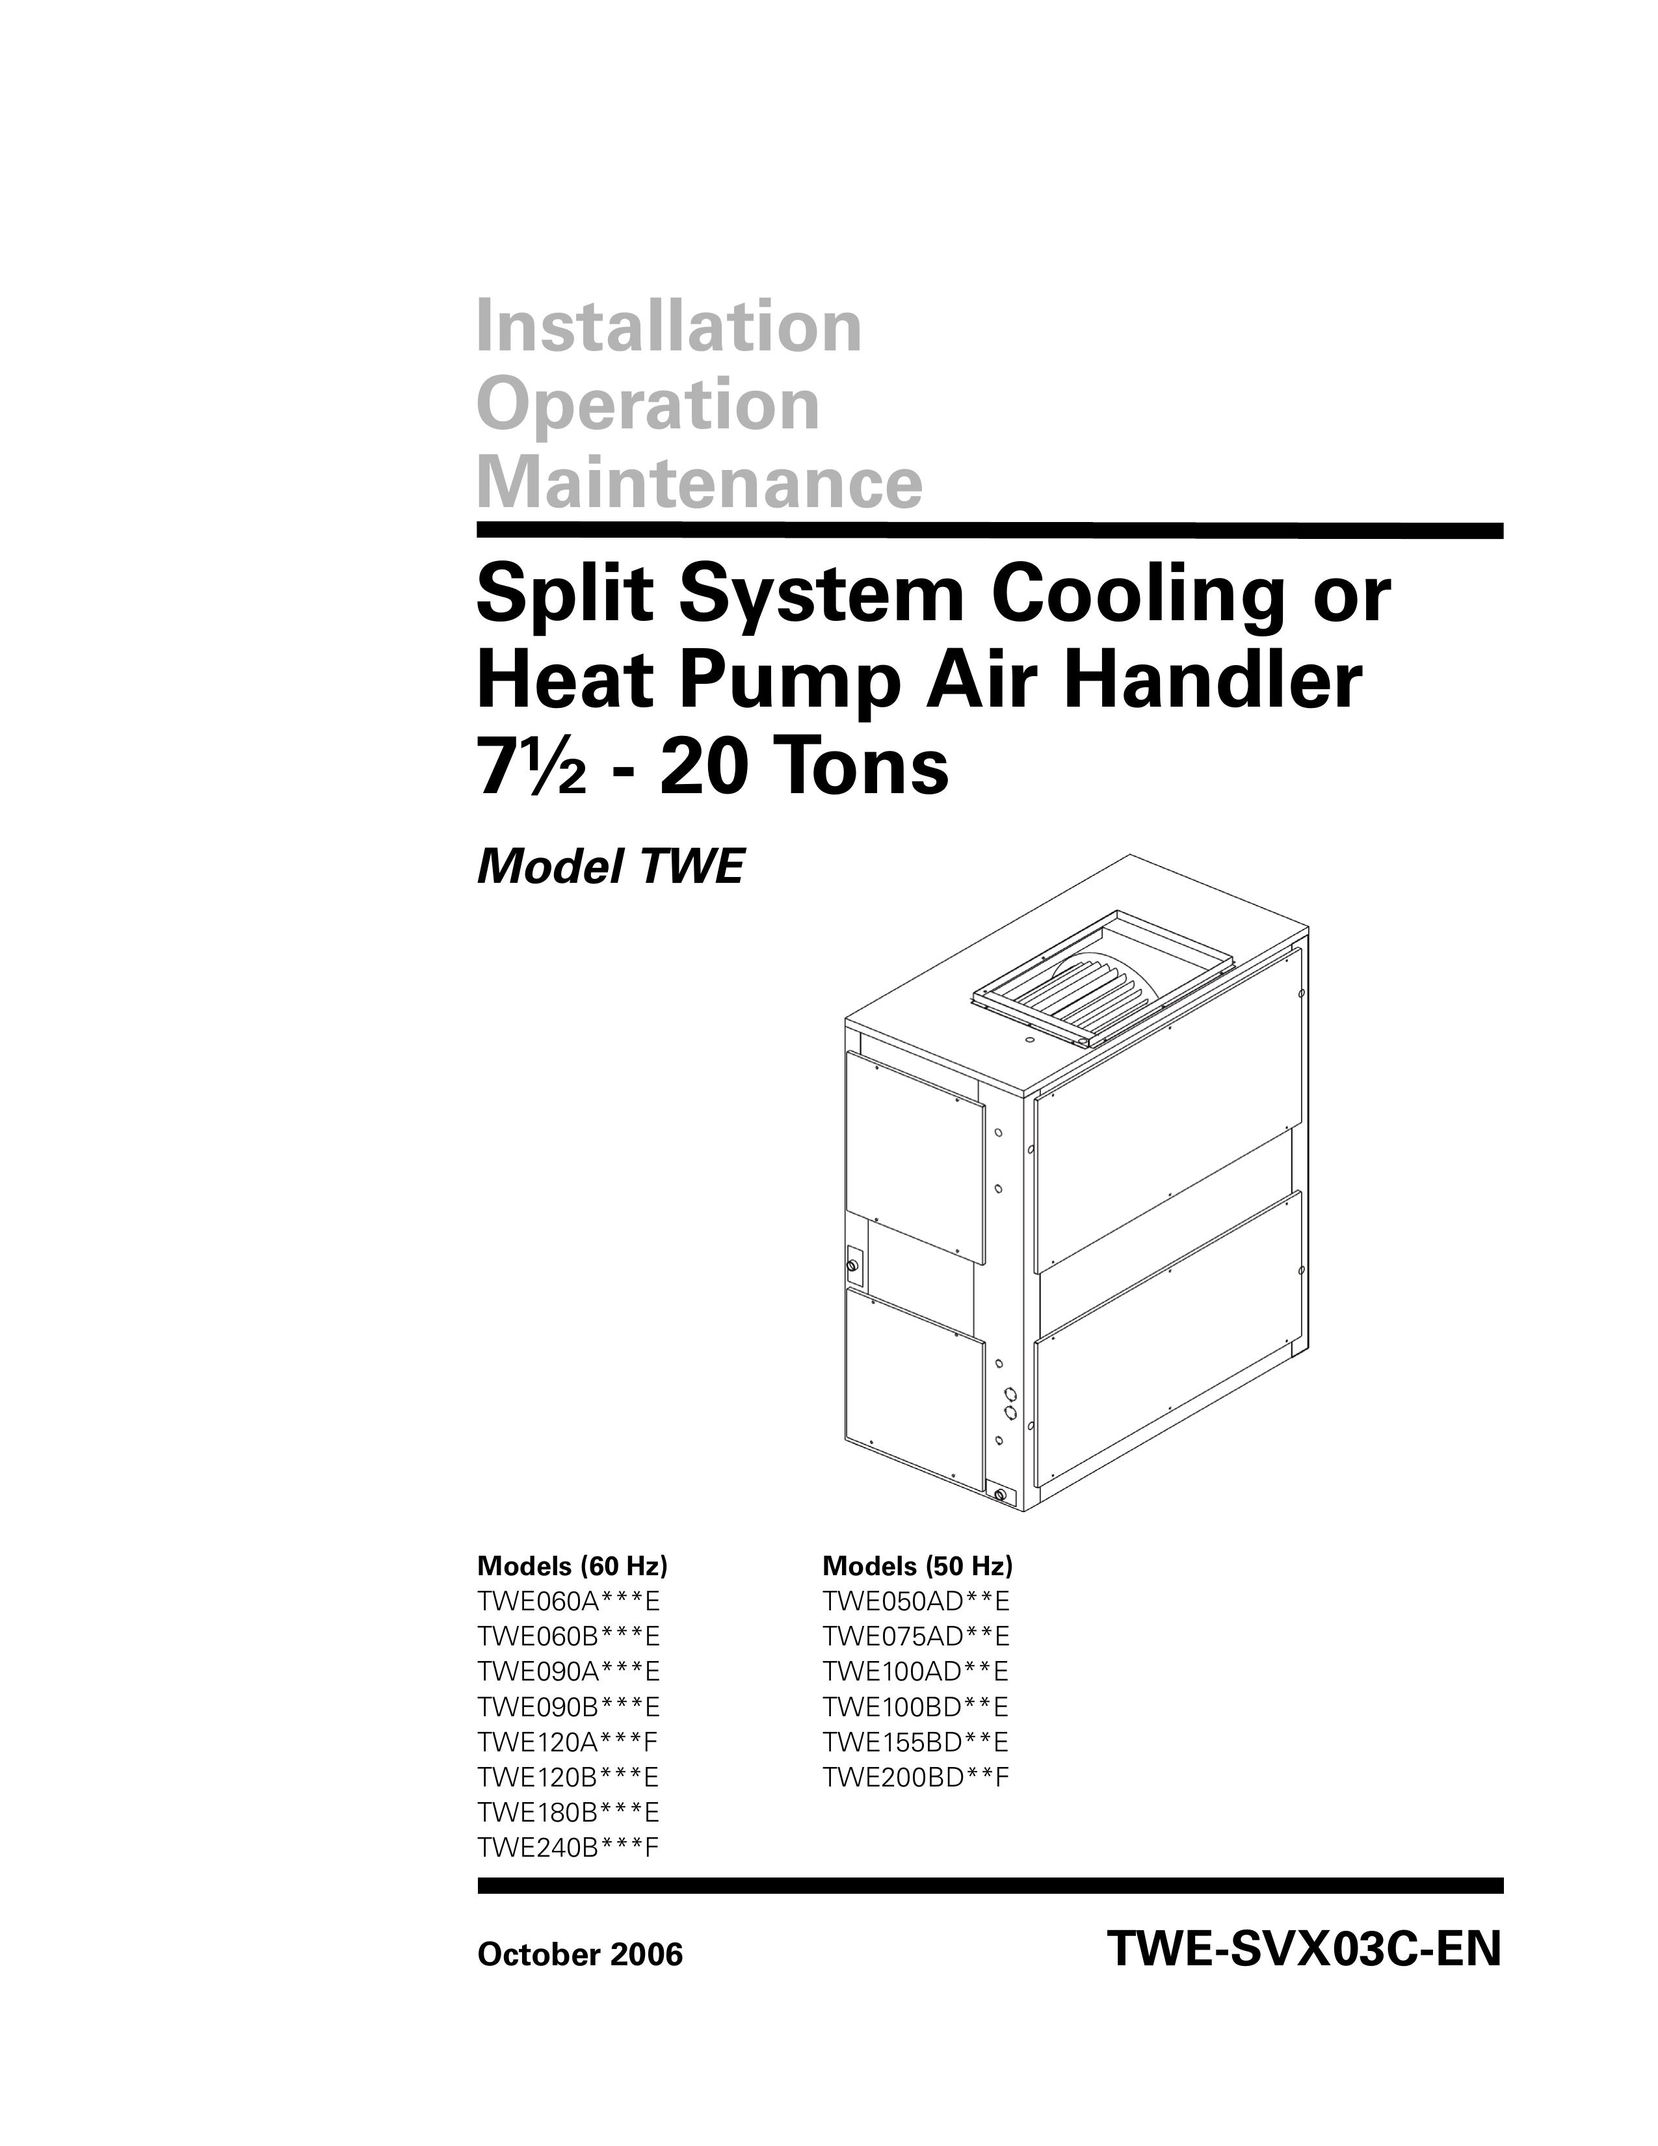 American Standard TWE090A***E Heat Pump User Manual